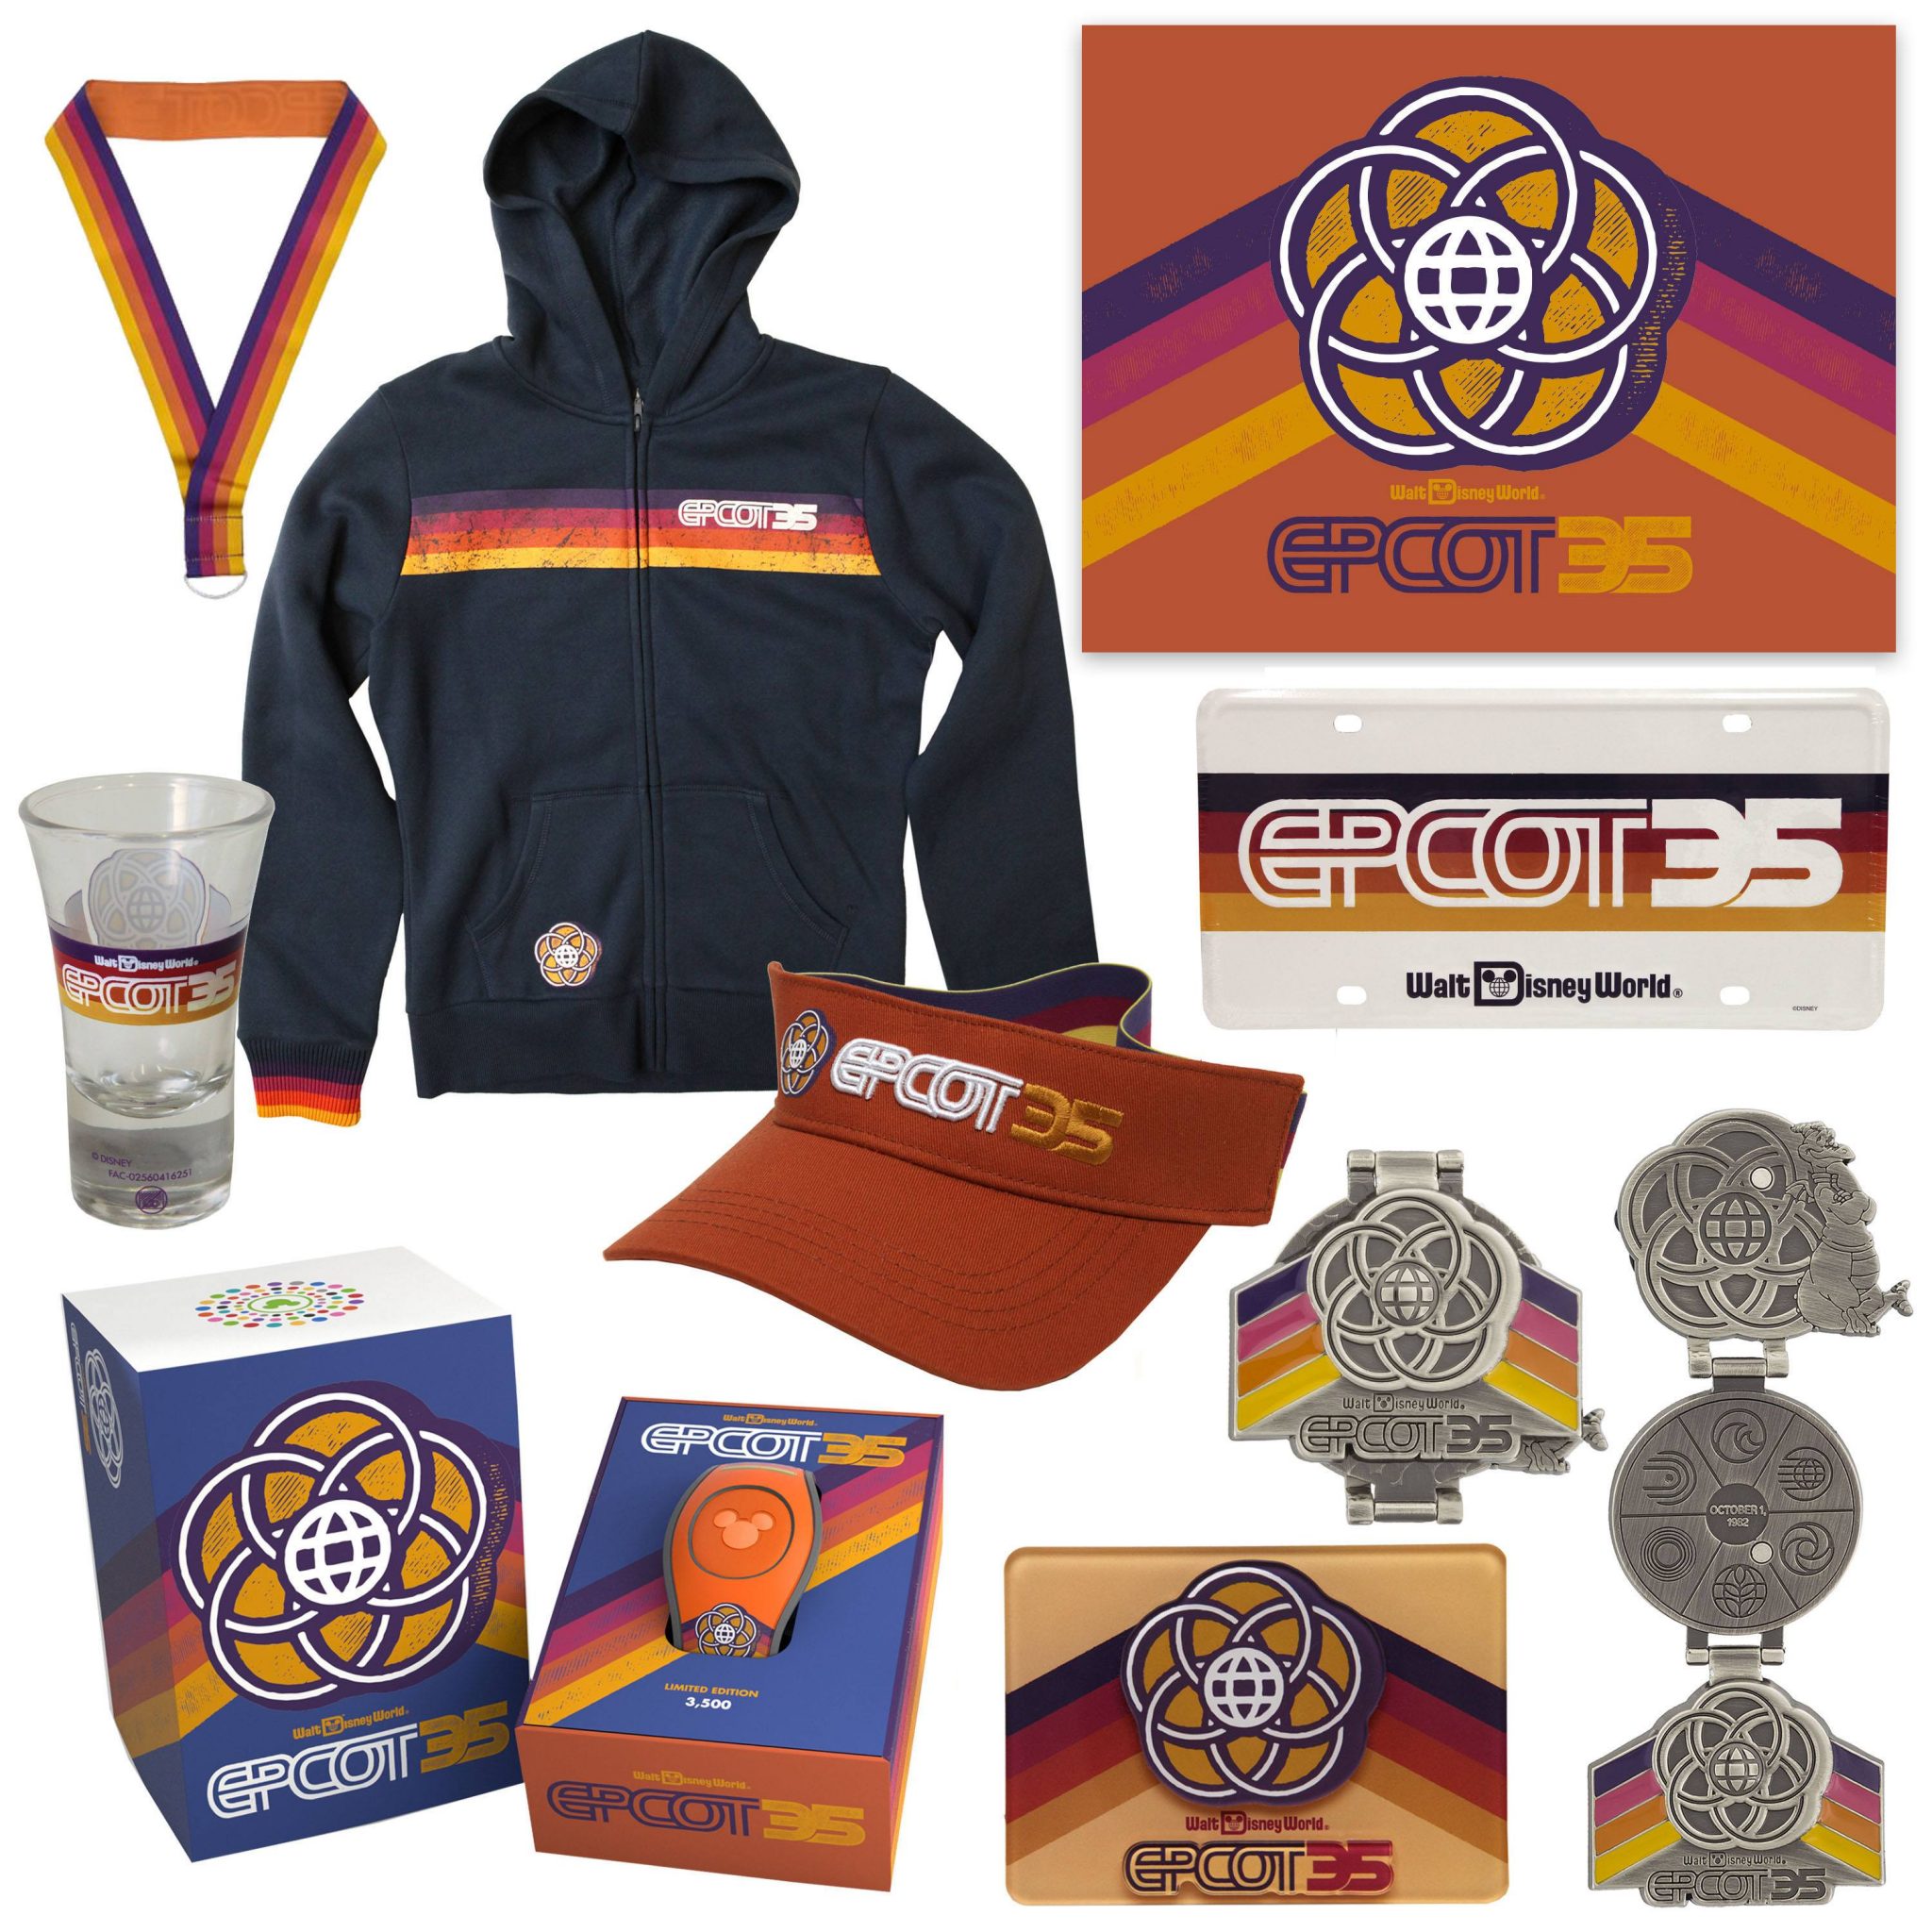 Epcot 35th Anniversary Merchandise